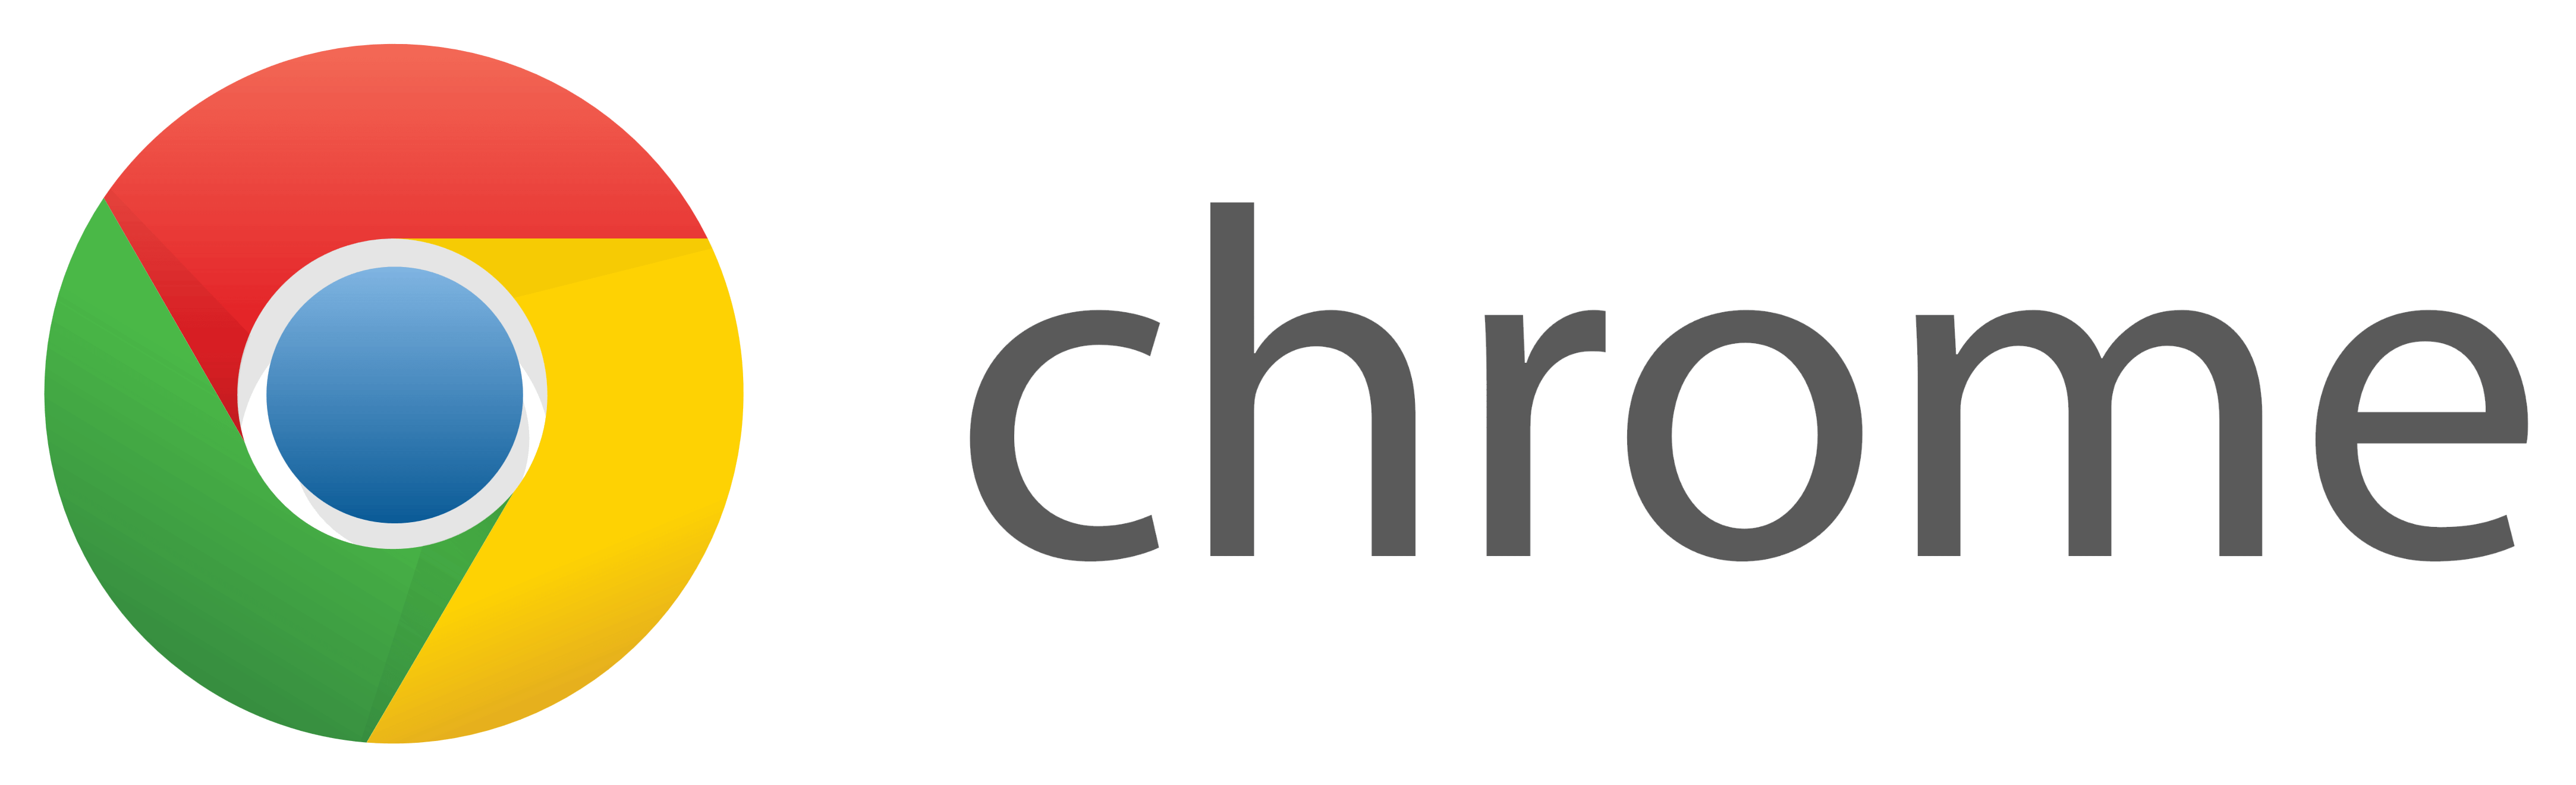 Google Chrome Logo, Icon - Google Chrome, Transparent background PNG HD thumbnail